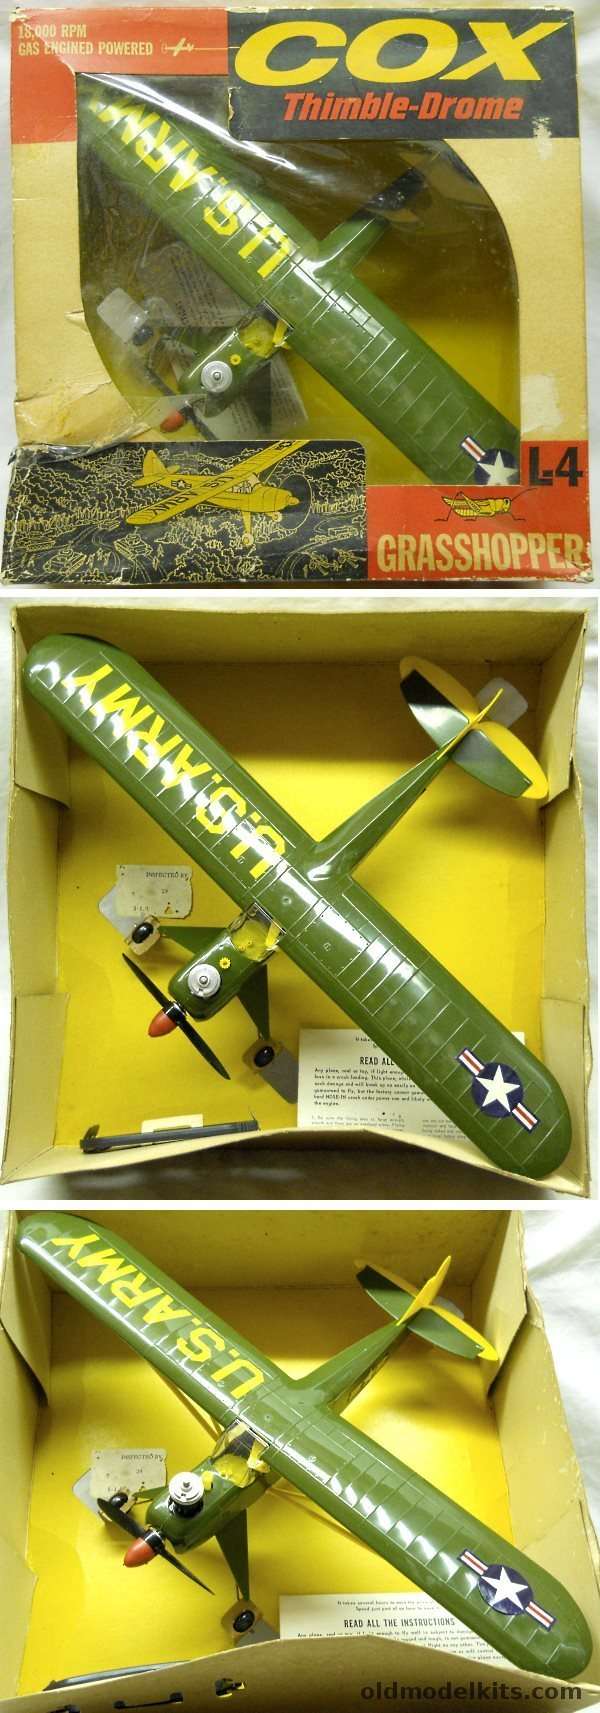 Cox Thimble-Drone L-4 Grasshopper Control Line Gas Aircraft, 7200-898 plastic model kit